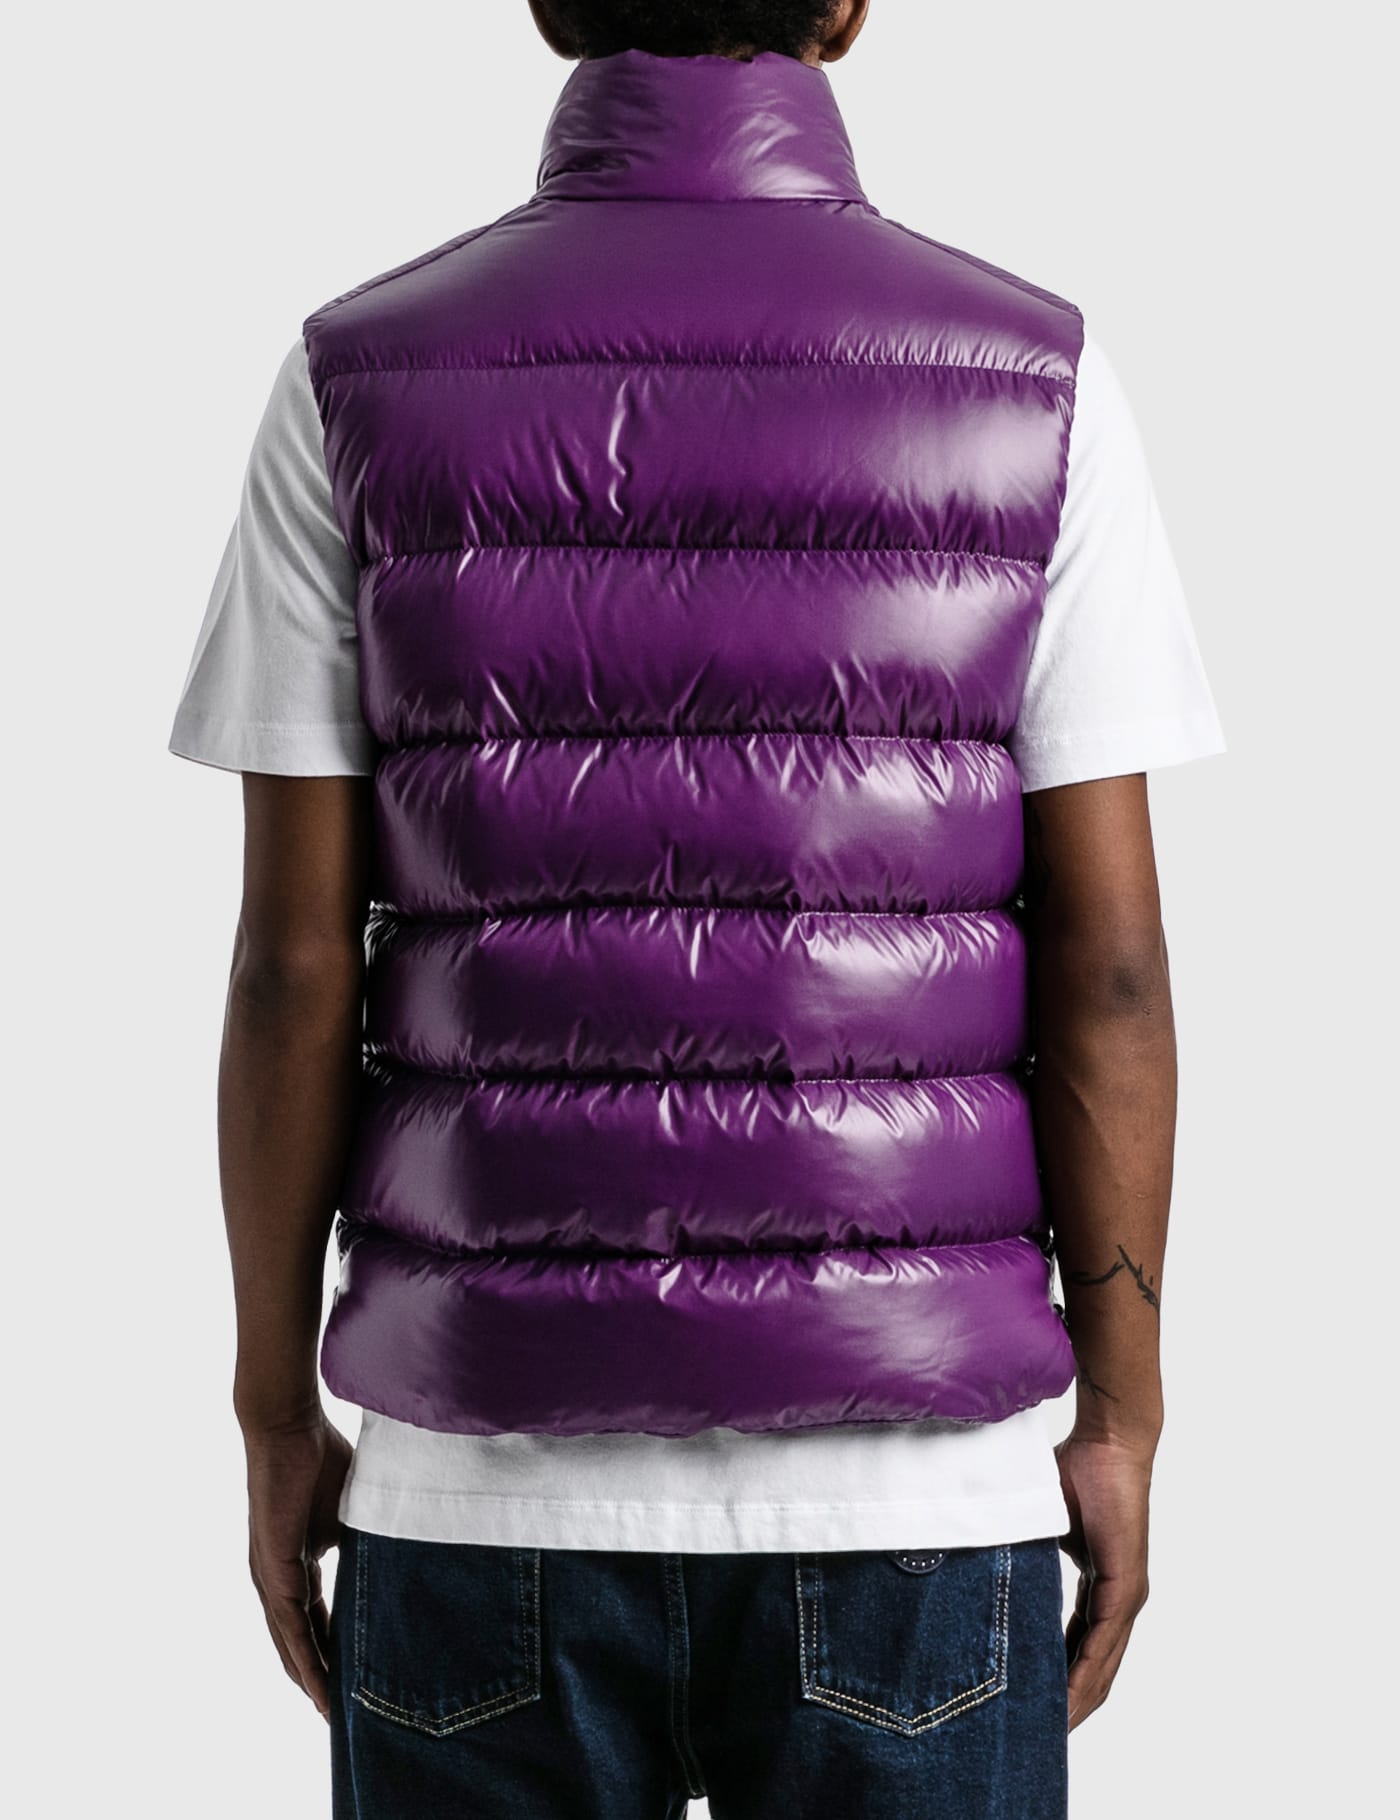 Tibb Vest in Purple FWRD Men Clothing Jackets Gilets 